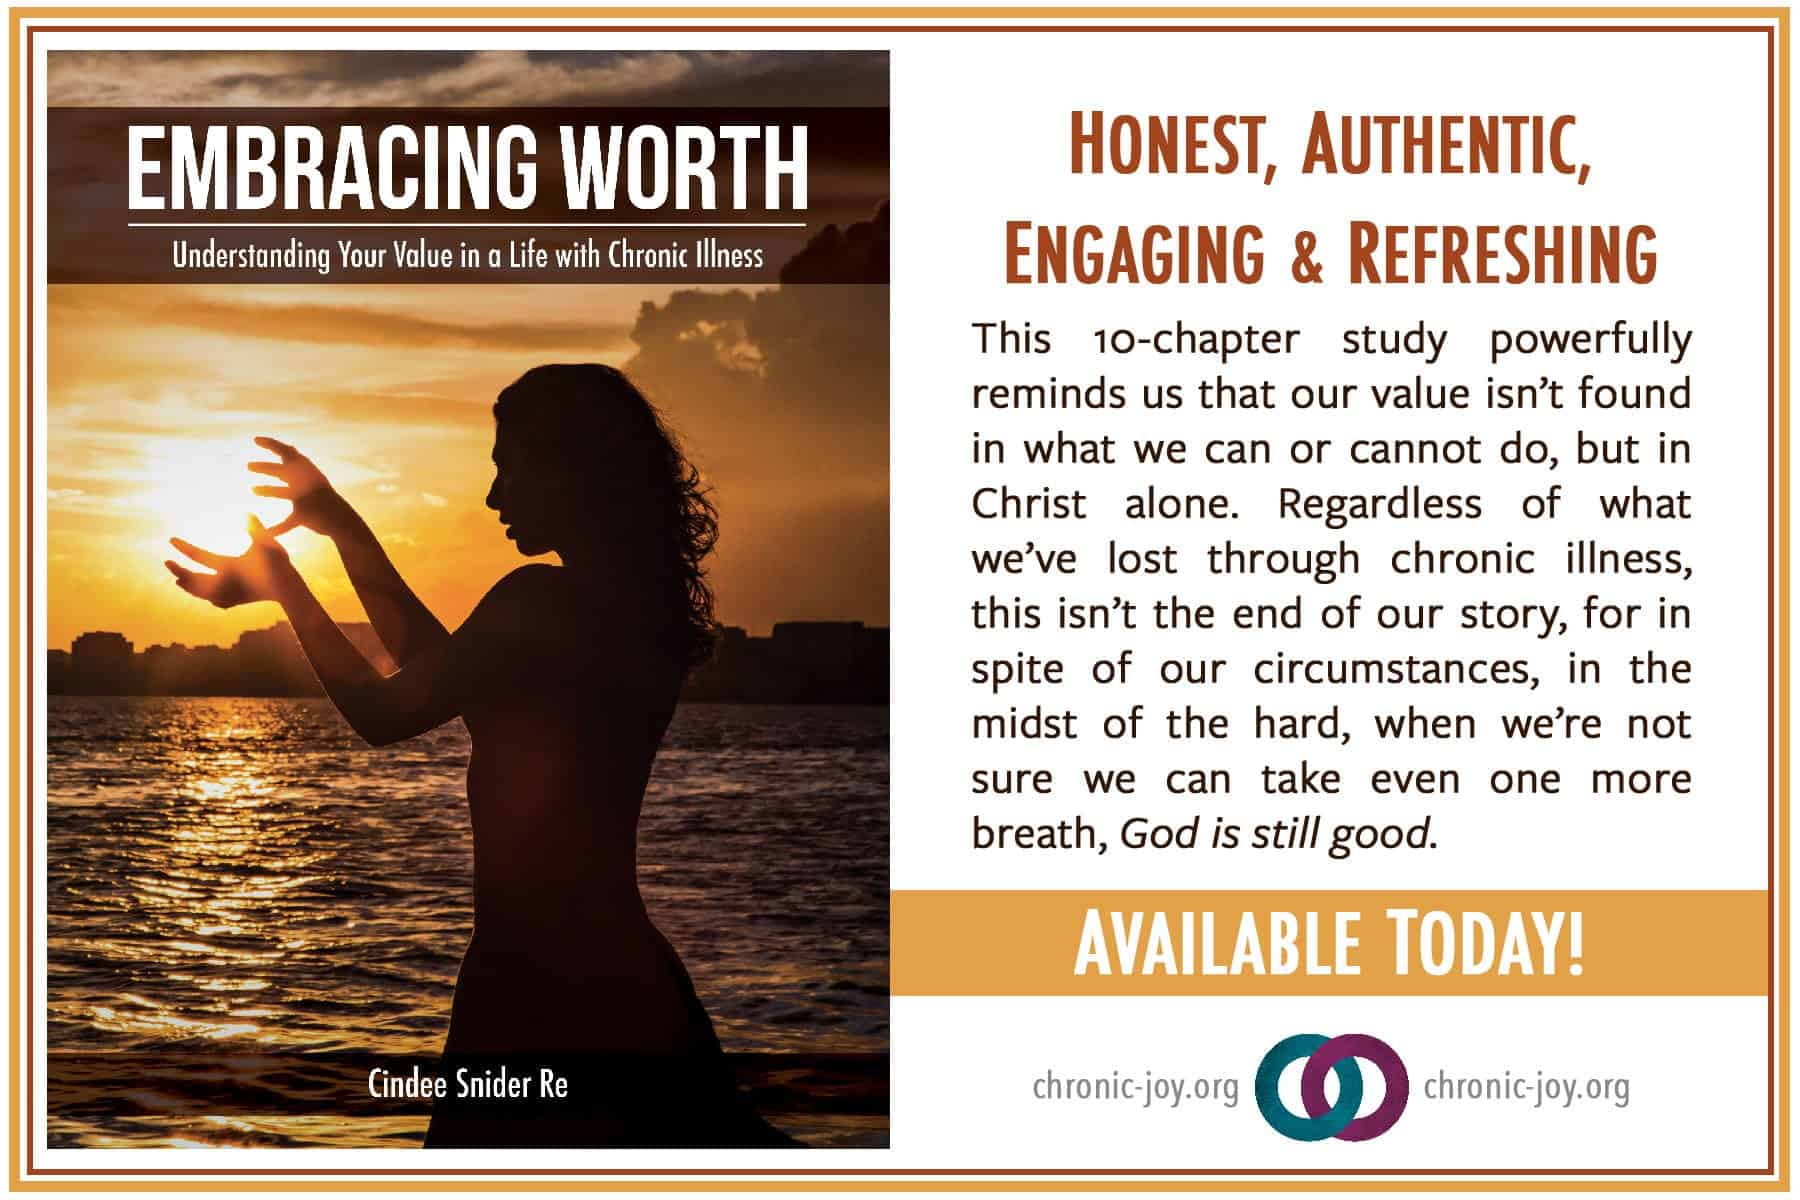 Embracing Worth